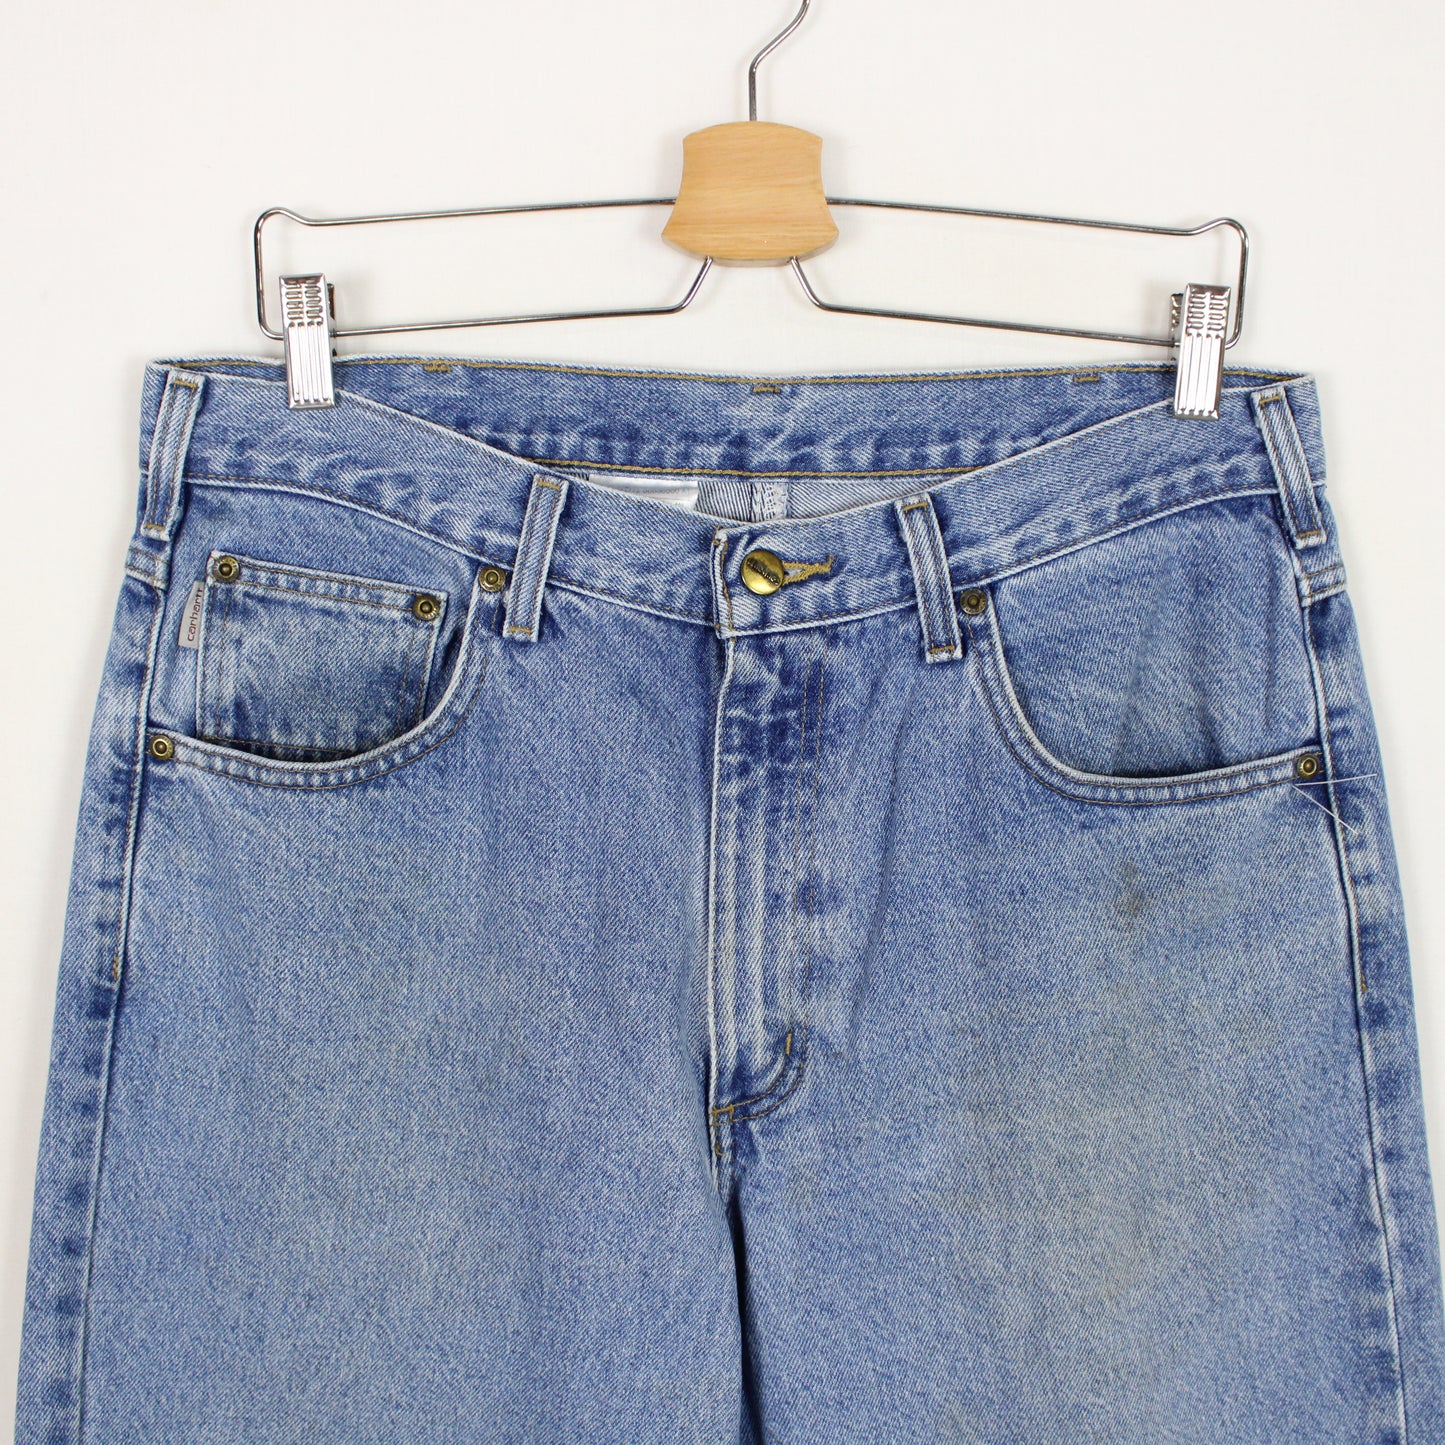 Vintage Carhartt Denim Pants - 34x32